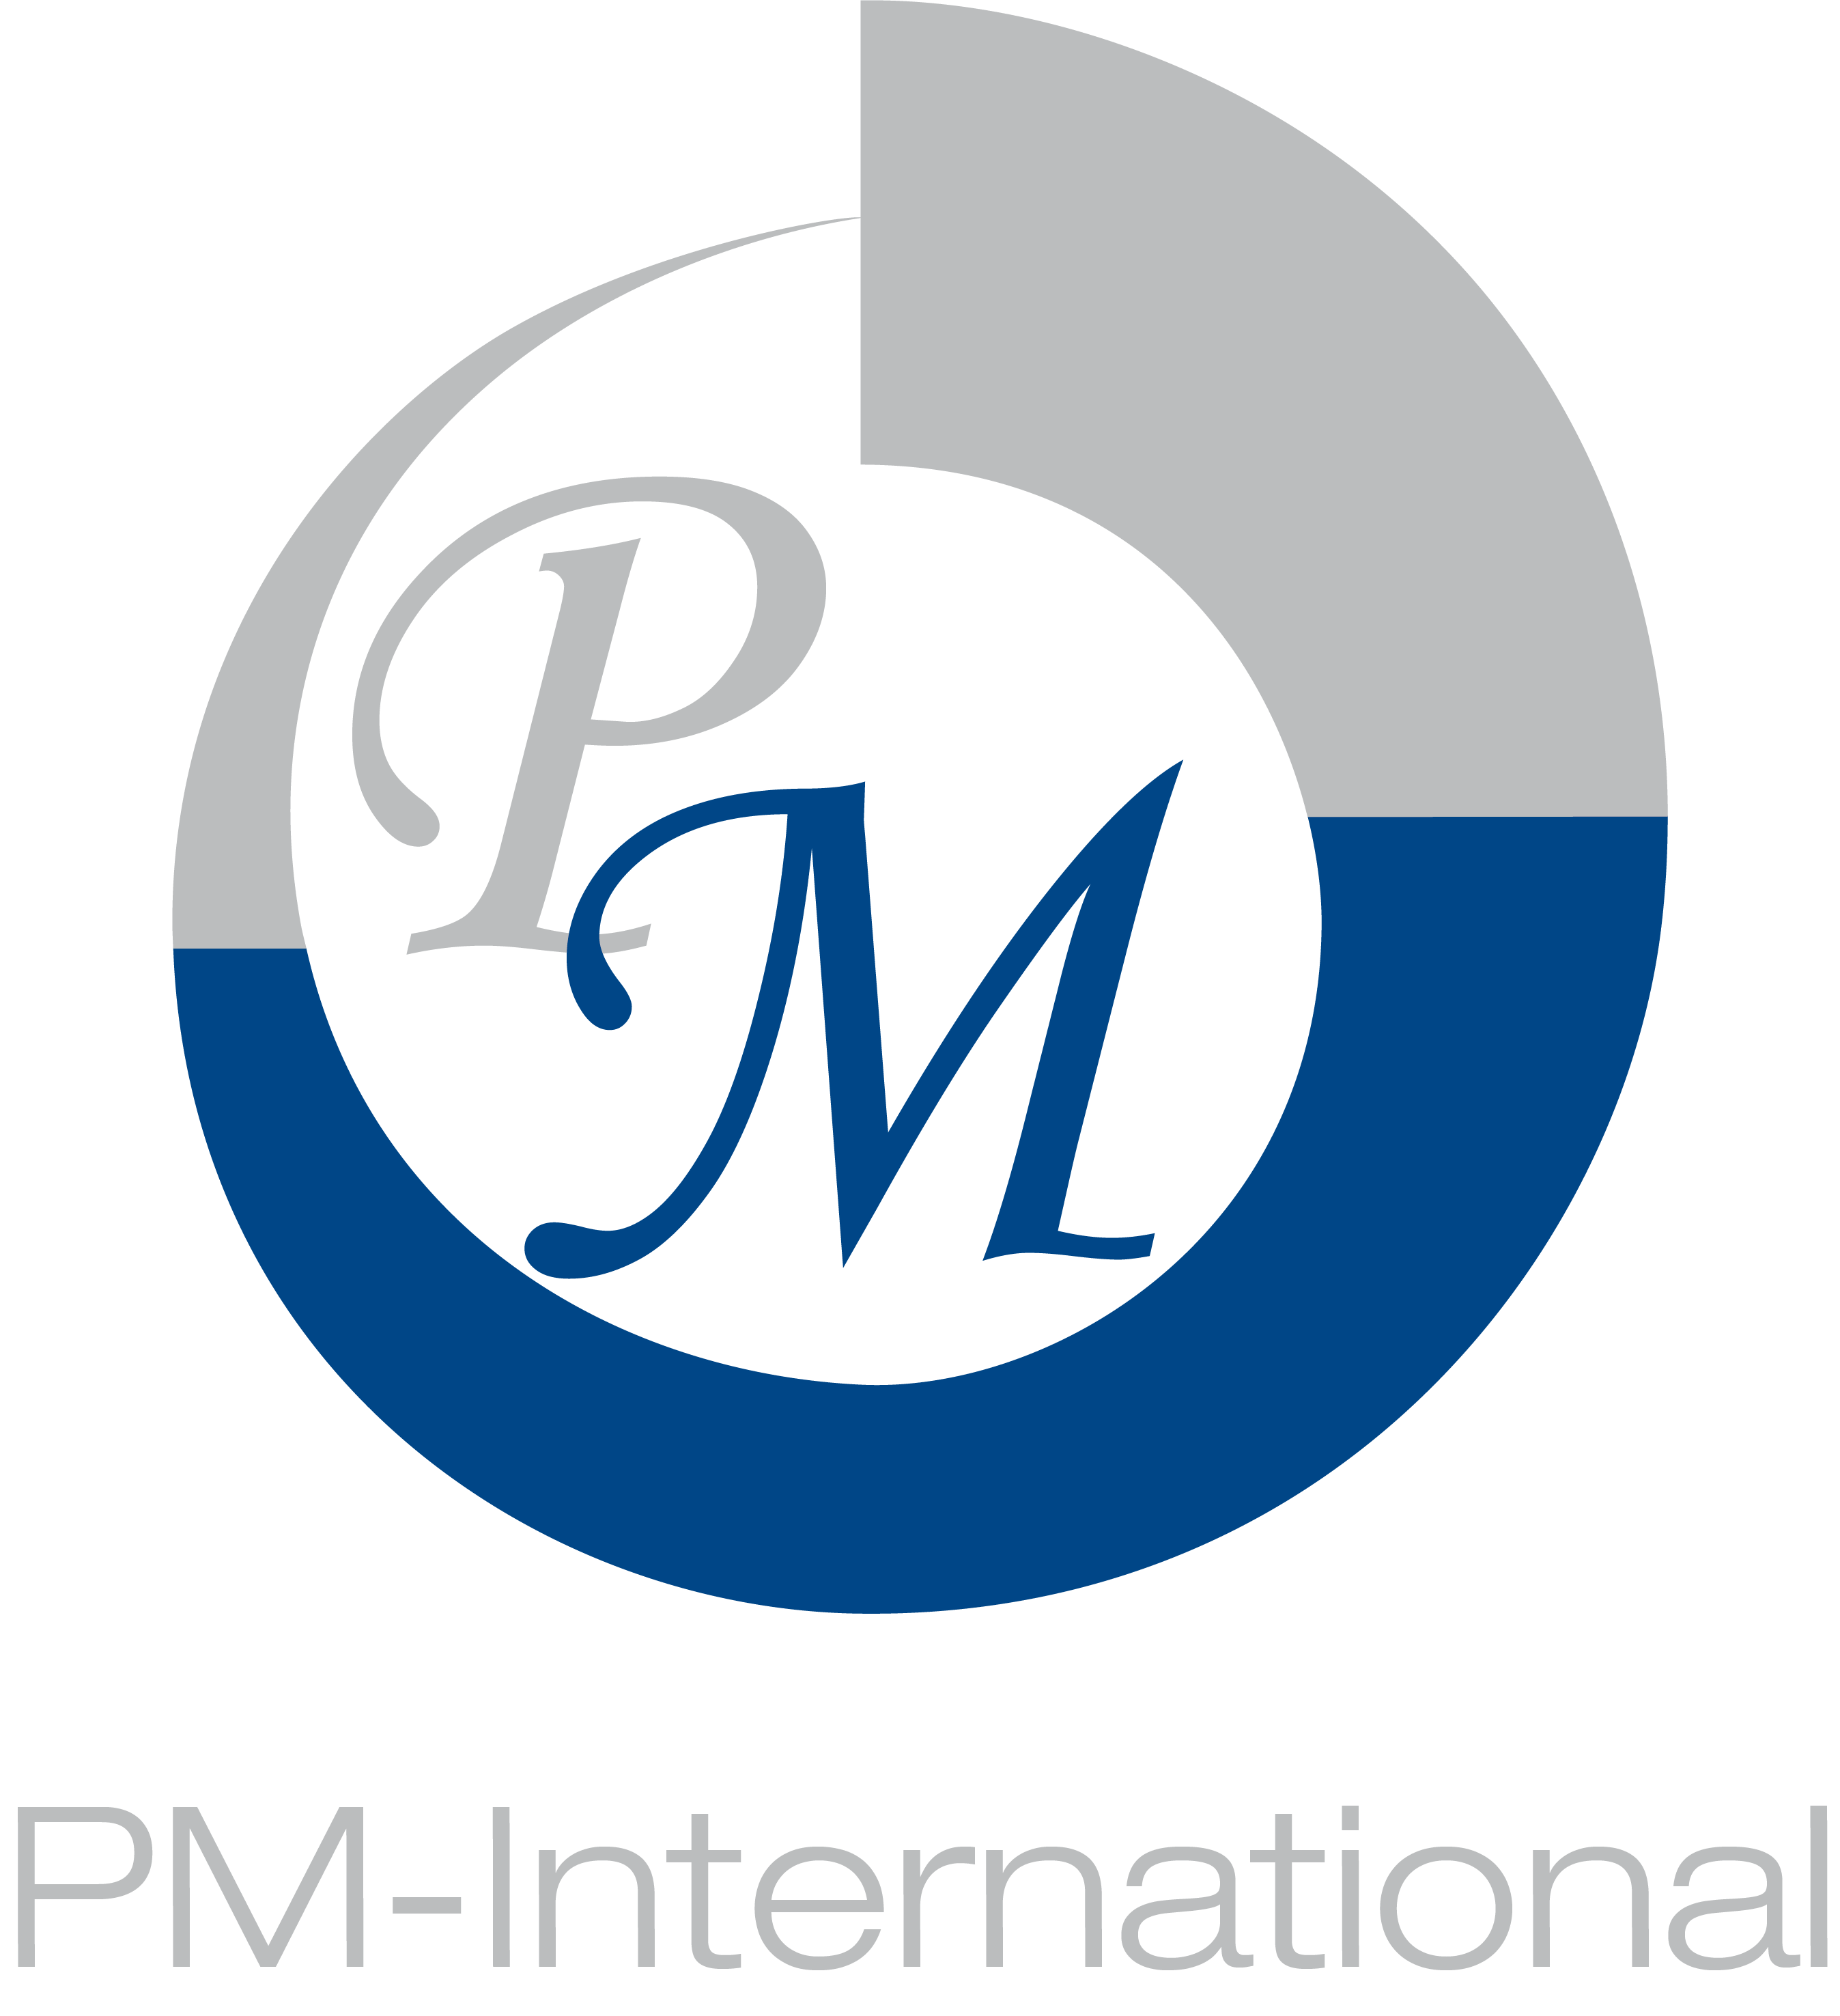 File:PM-International Logo.png - Wikimedia Commons